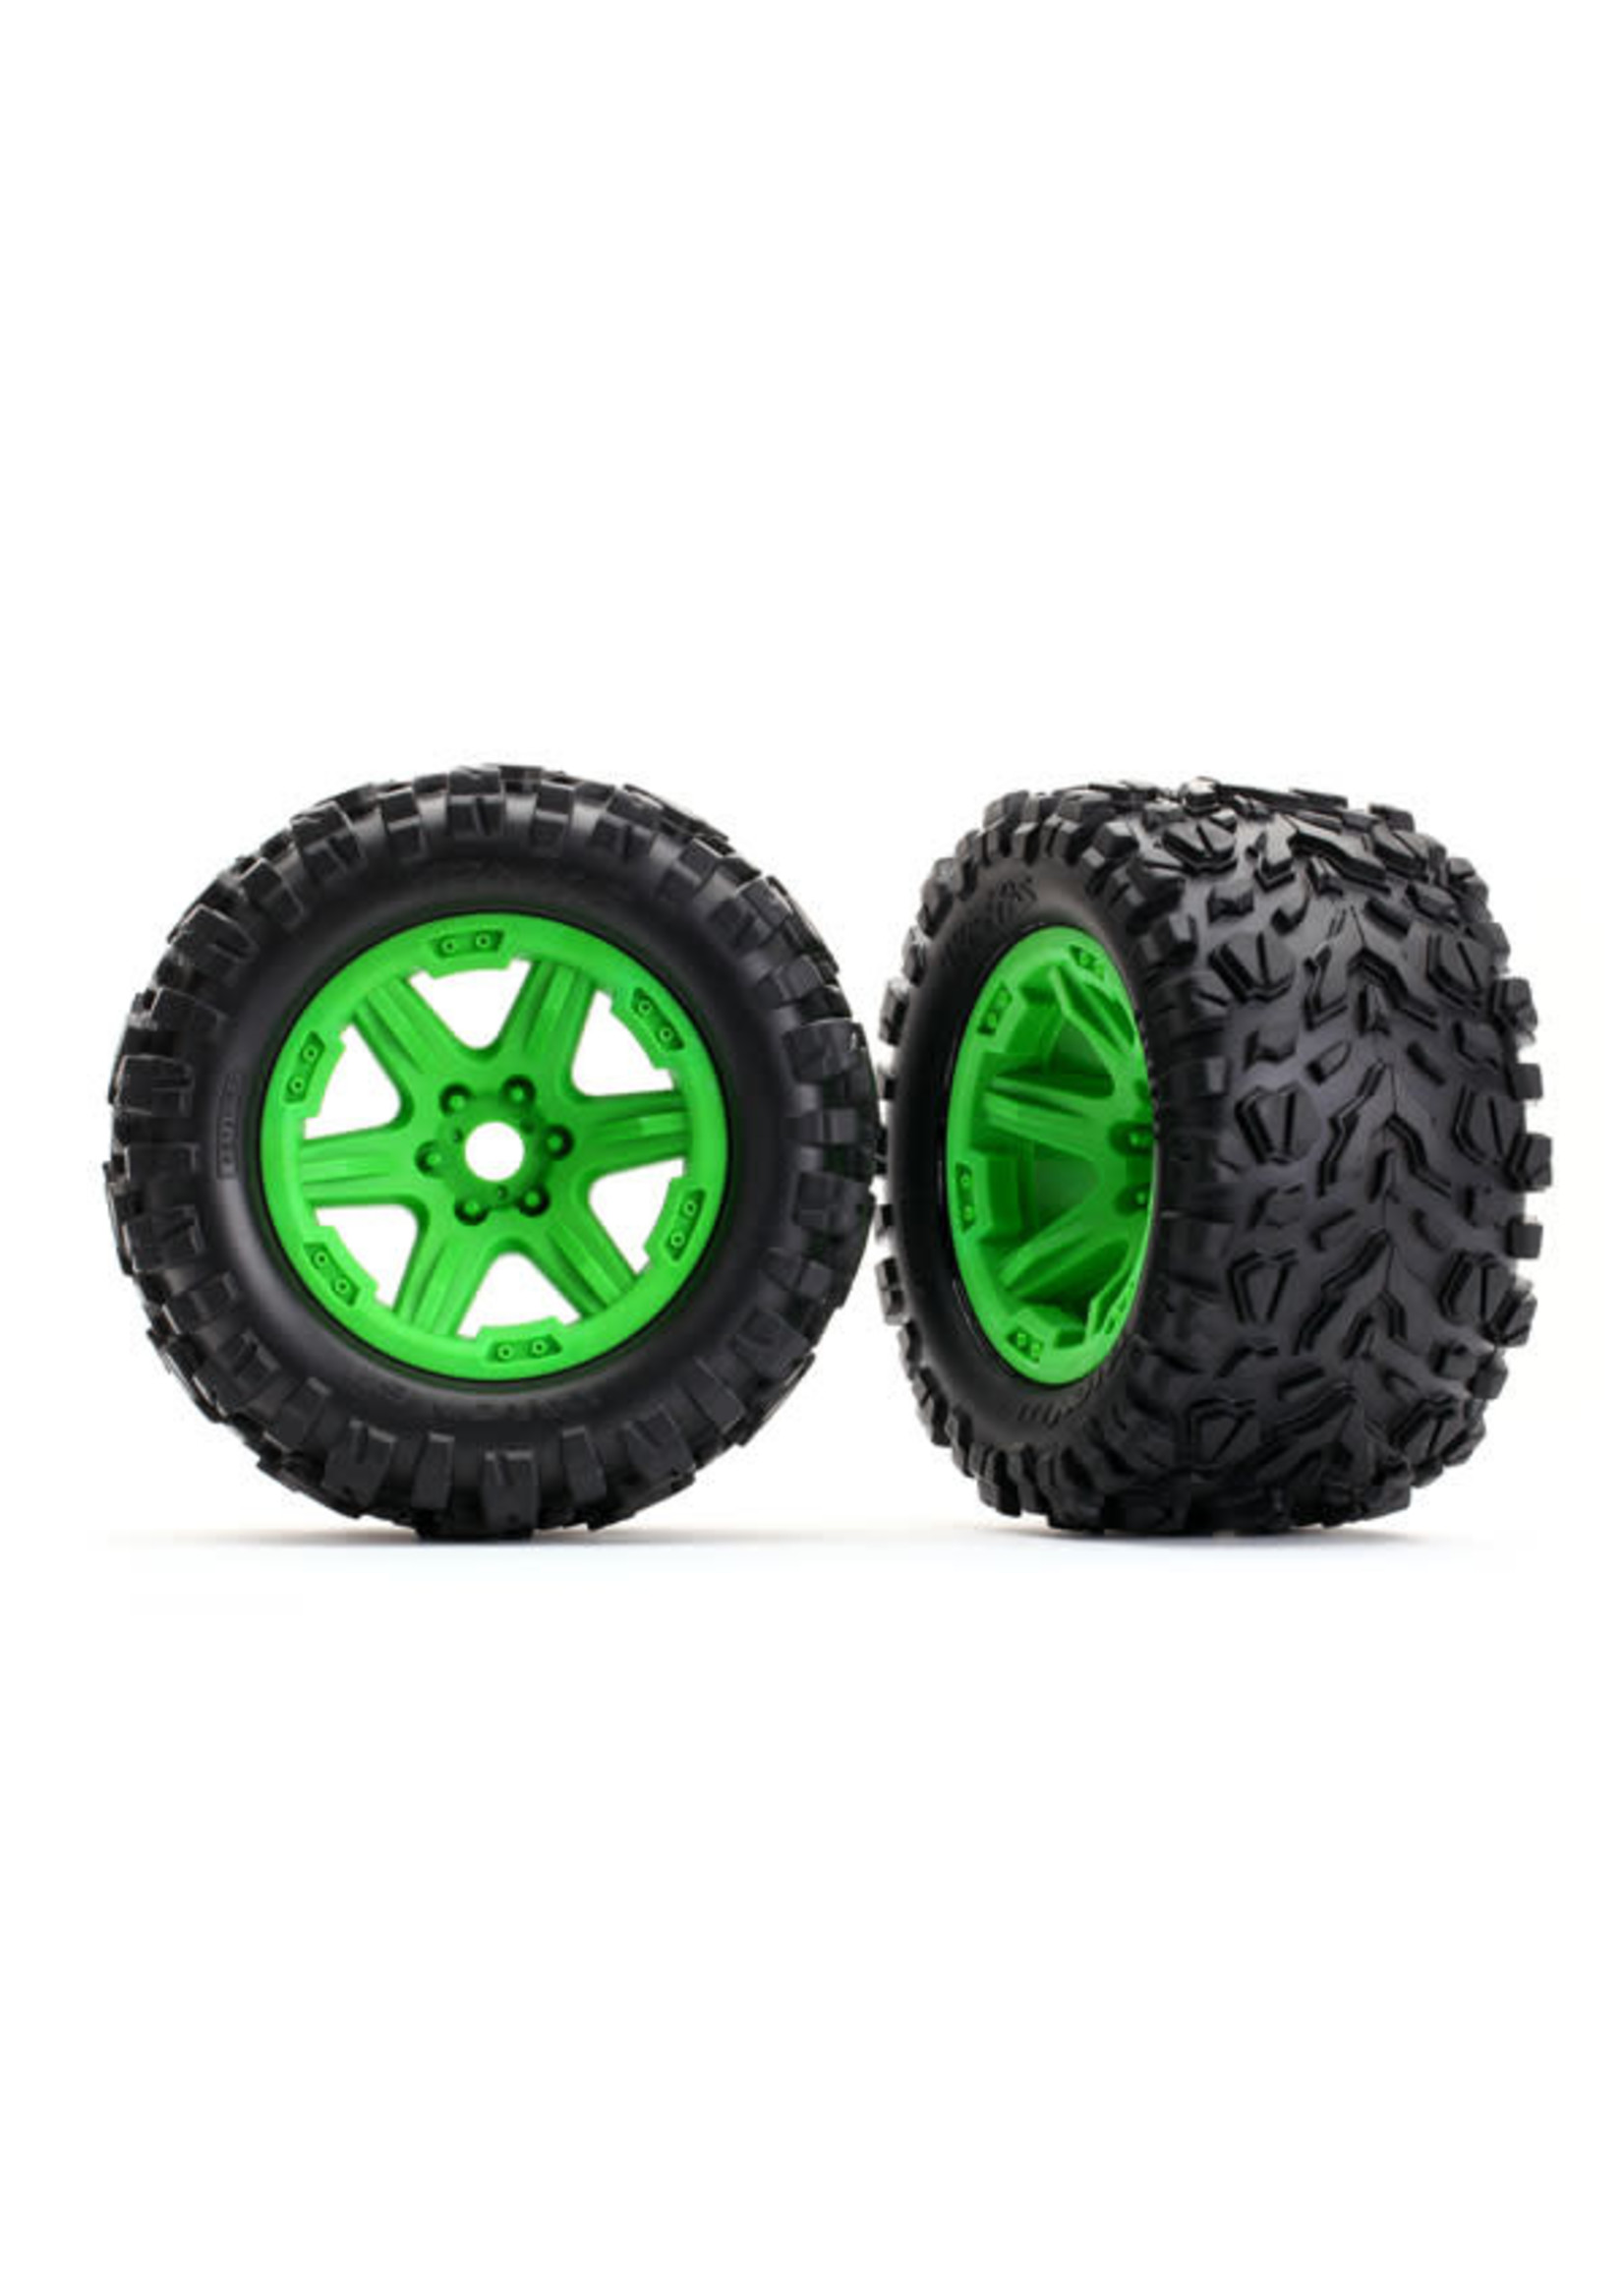 Traxxas Tires & wheels, assembled, glued (green wheels, Talon EXT tires, foam inserts) (2) (17mm splined) (TSM rated)